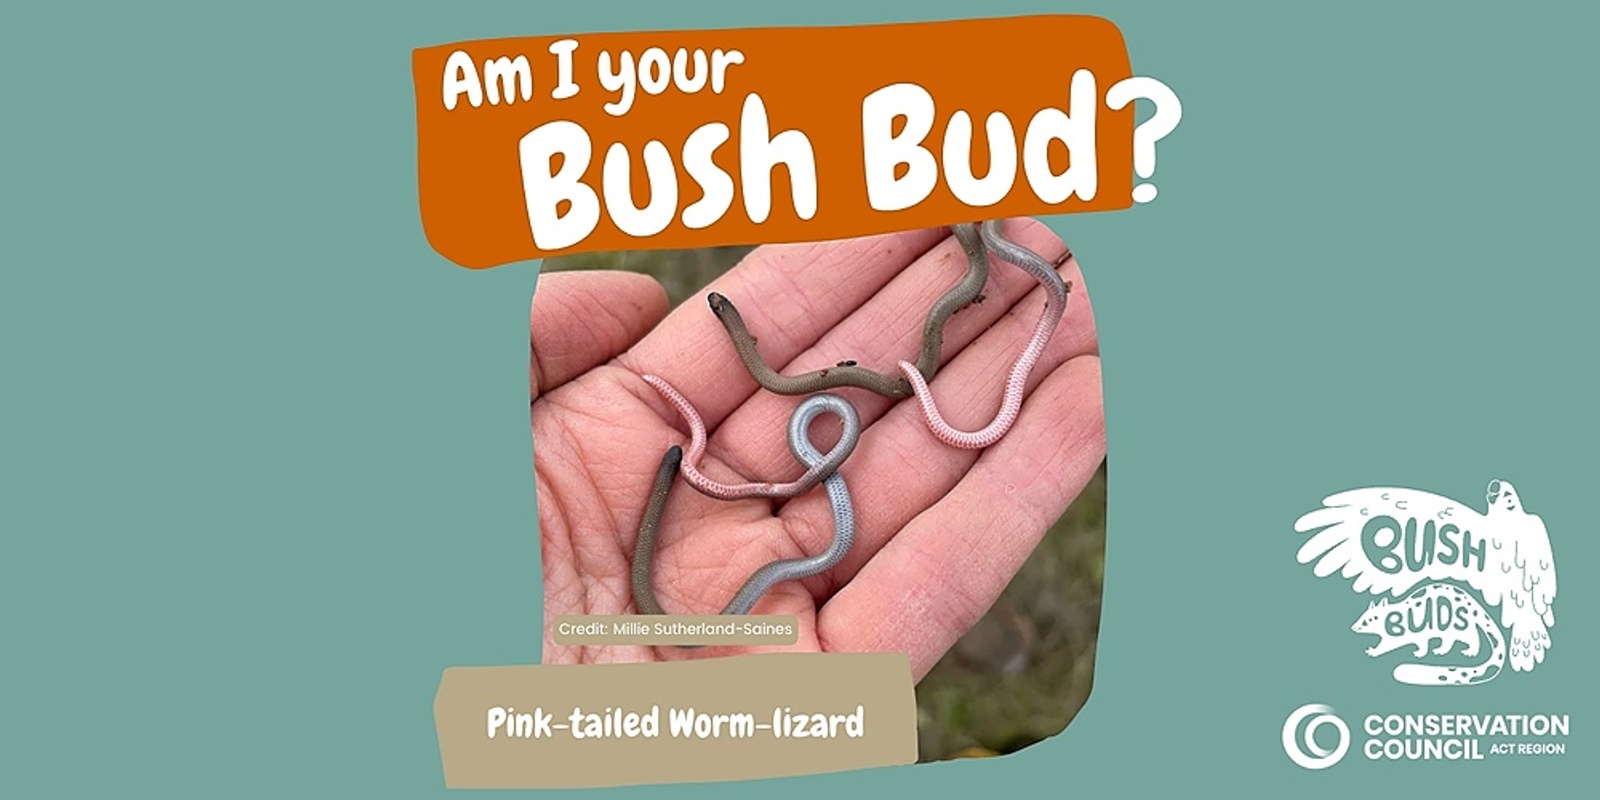 Bush Buds: Pink-tailed Worm-lizard